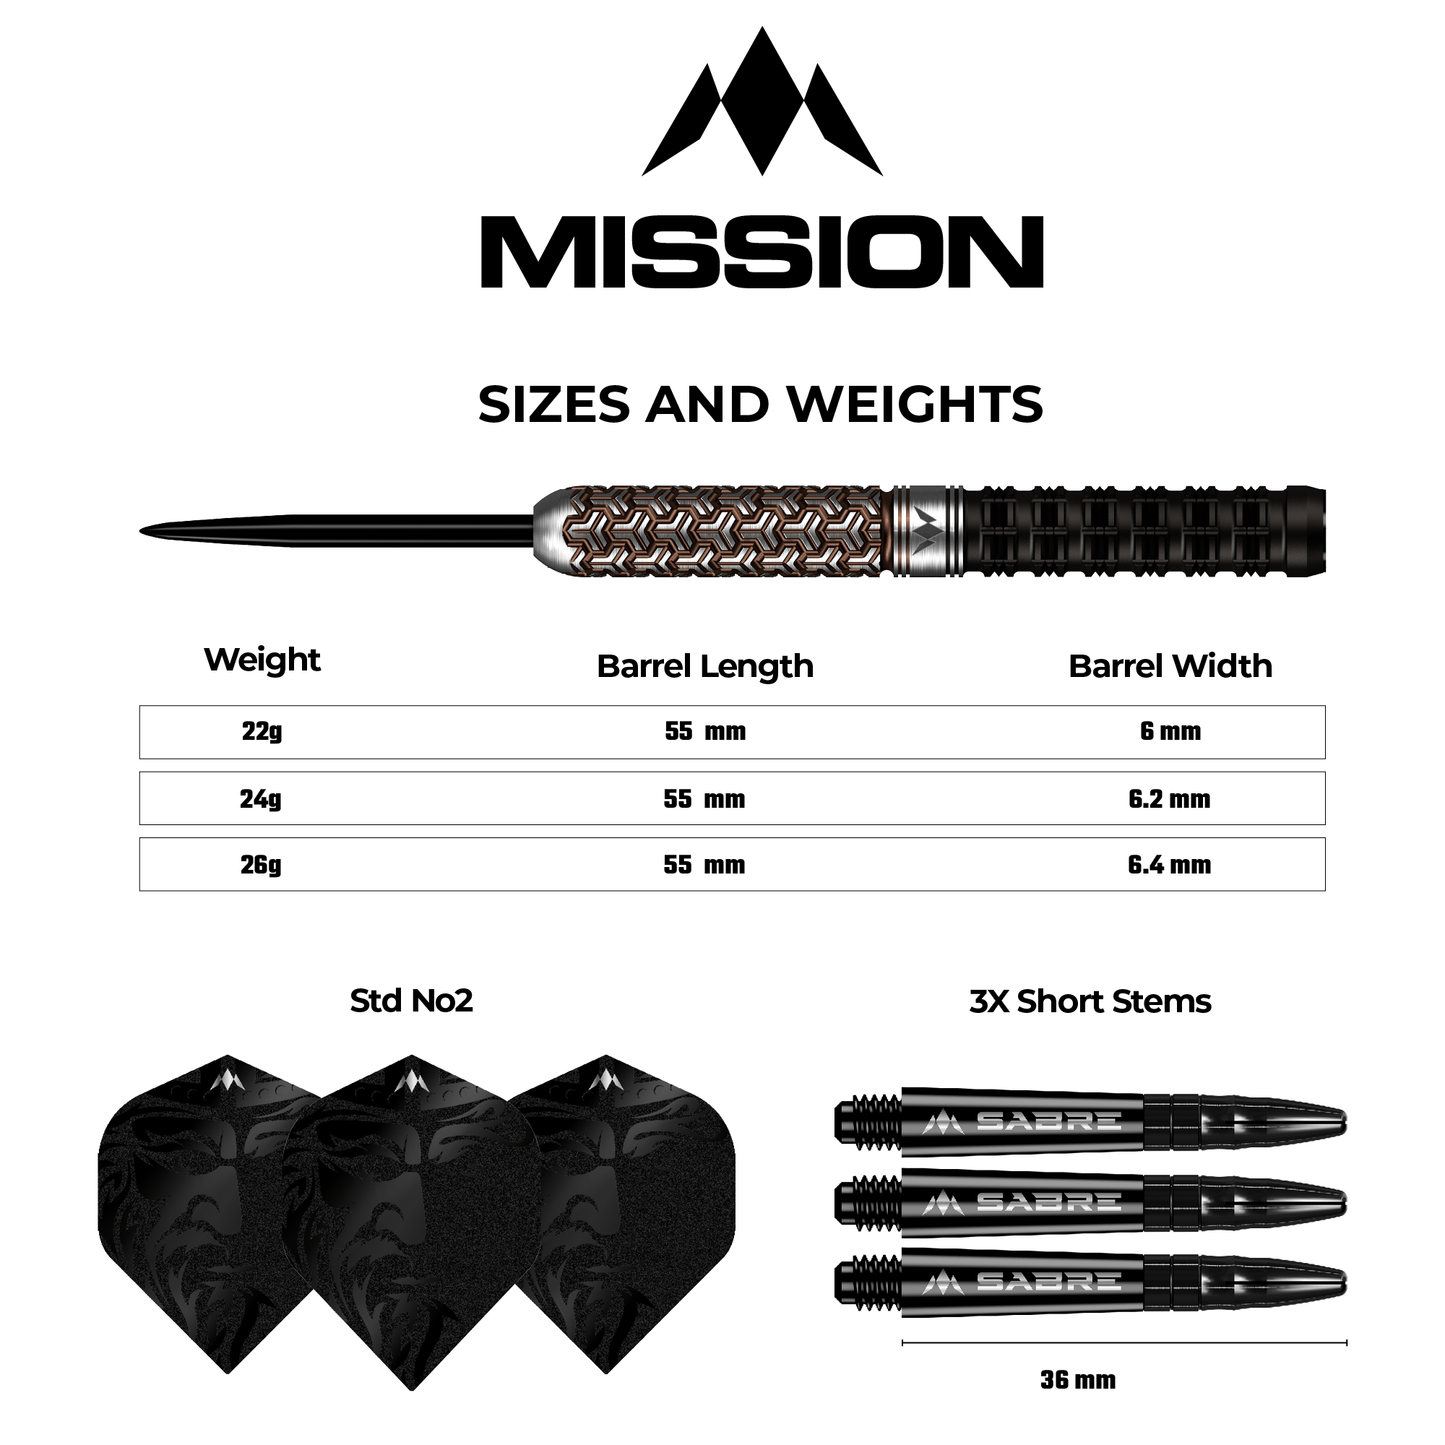 Mission Archon Darts - Steel Tip - 97.5% - Black & Bronze PVD